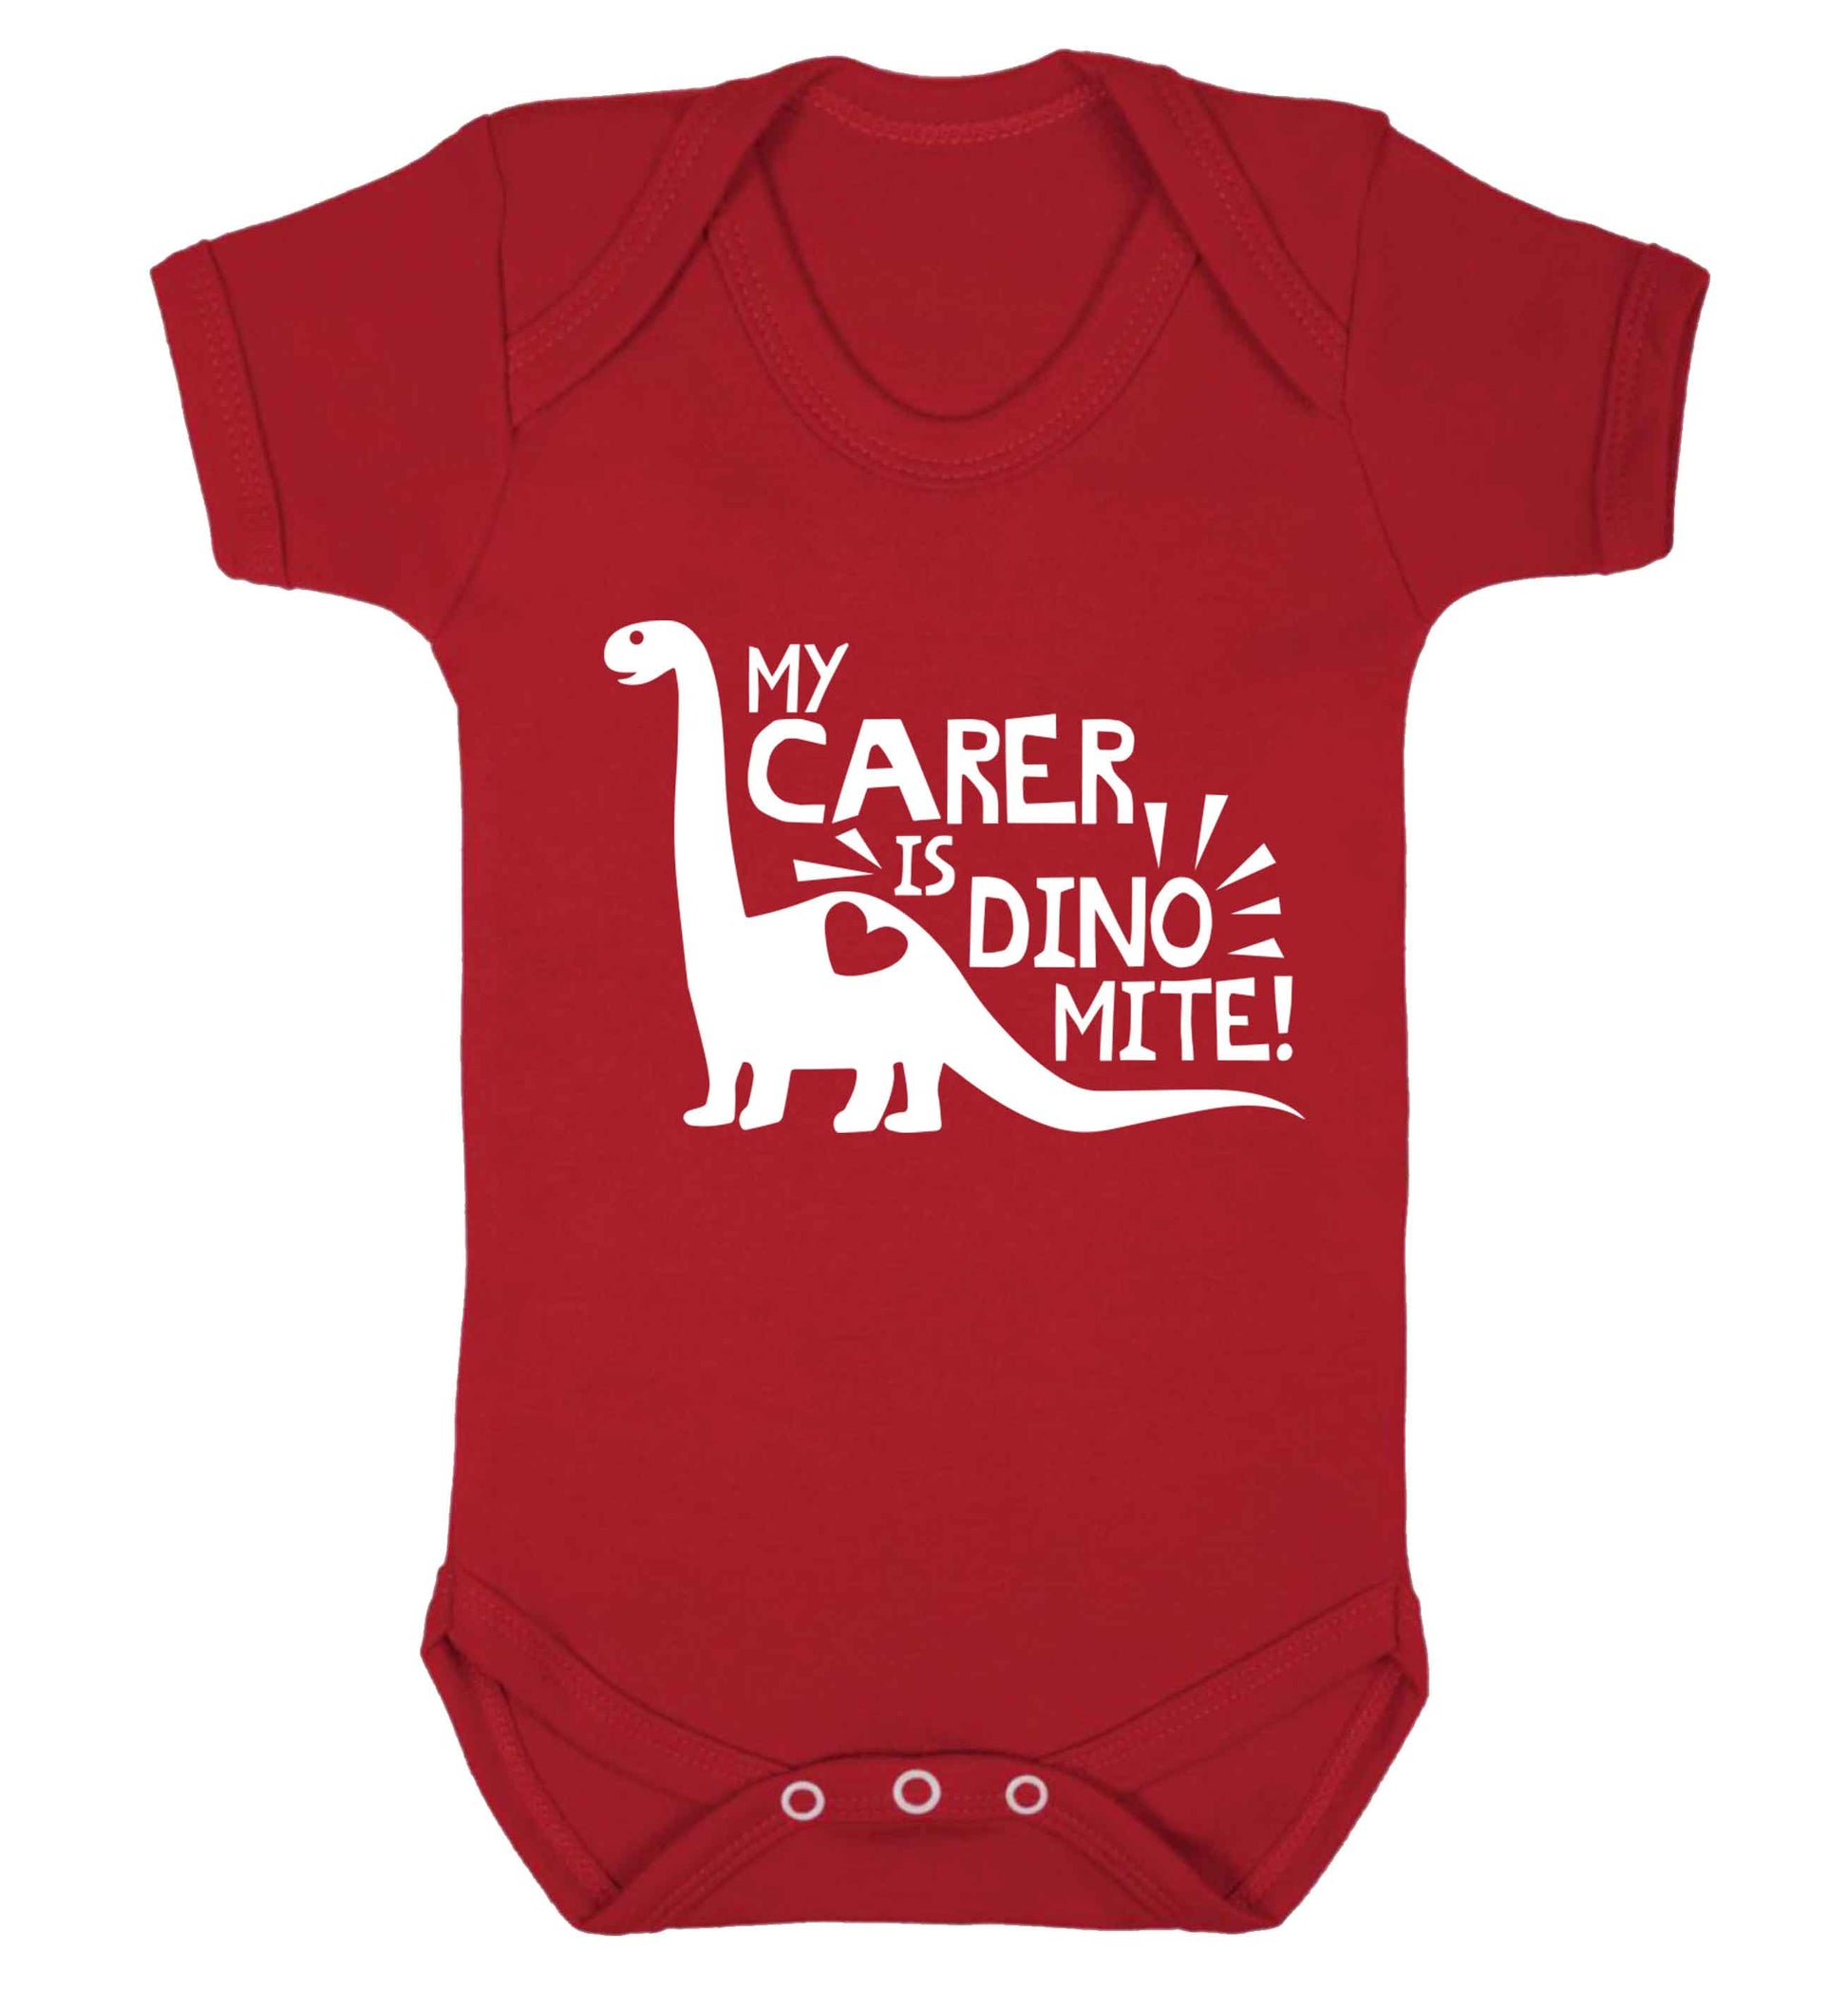 My carer is dinomite! Baby Vest red 18-24 months